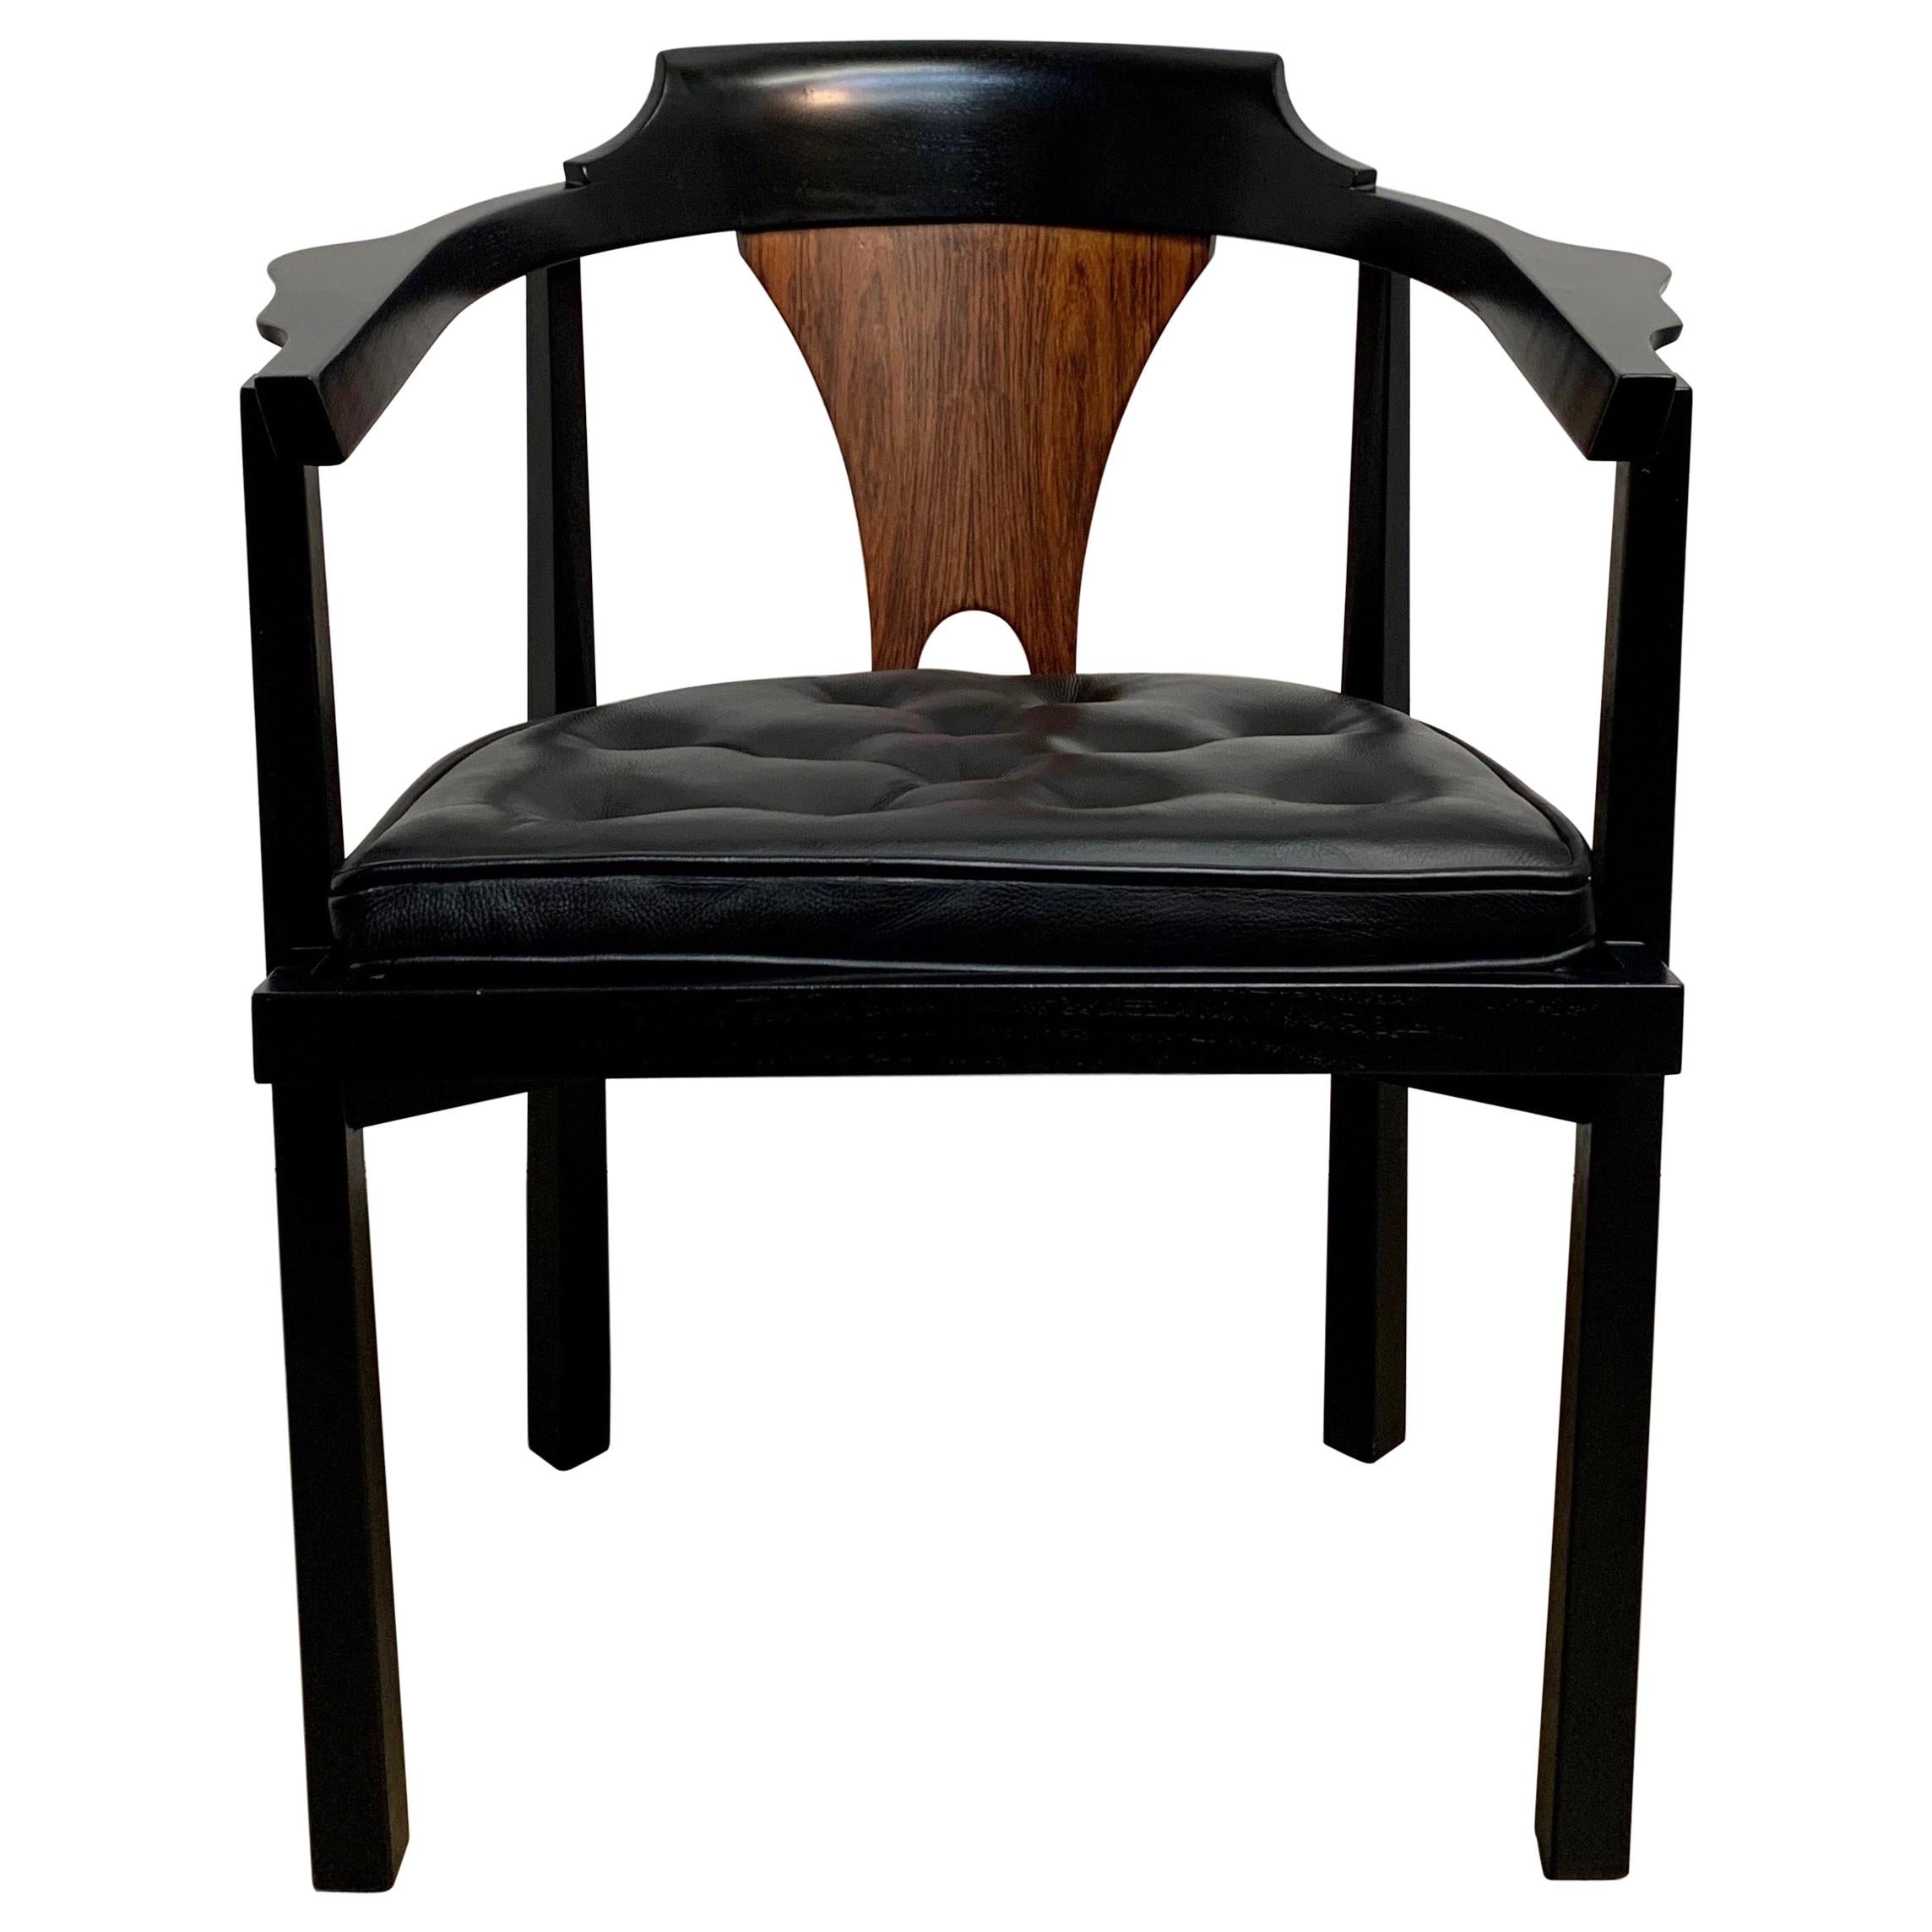 "Horseshoe" Chair by Edward Wormley for Dunbar